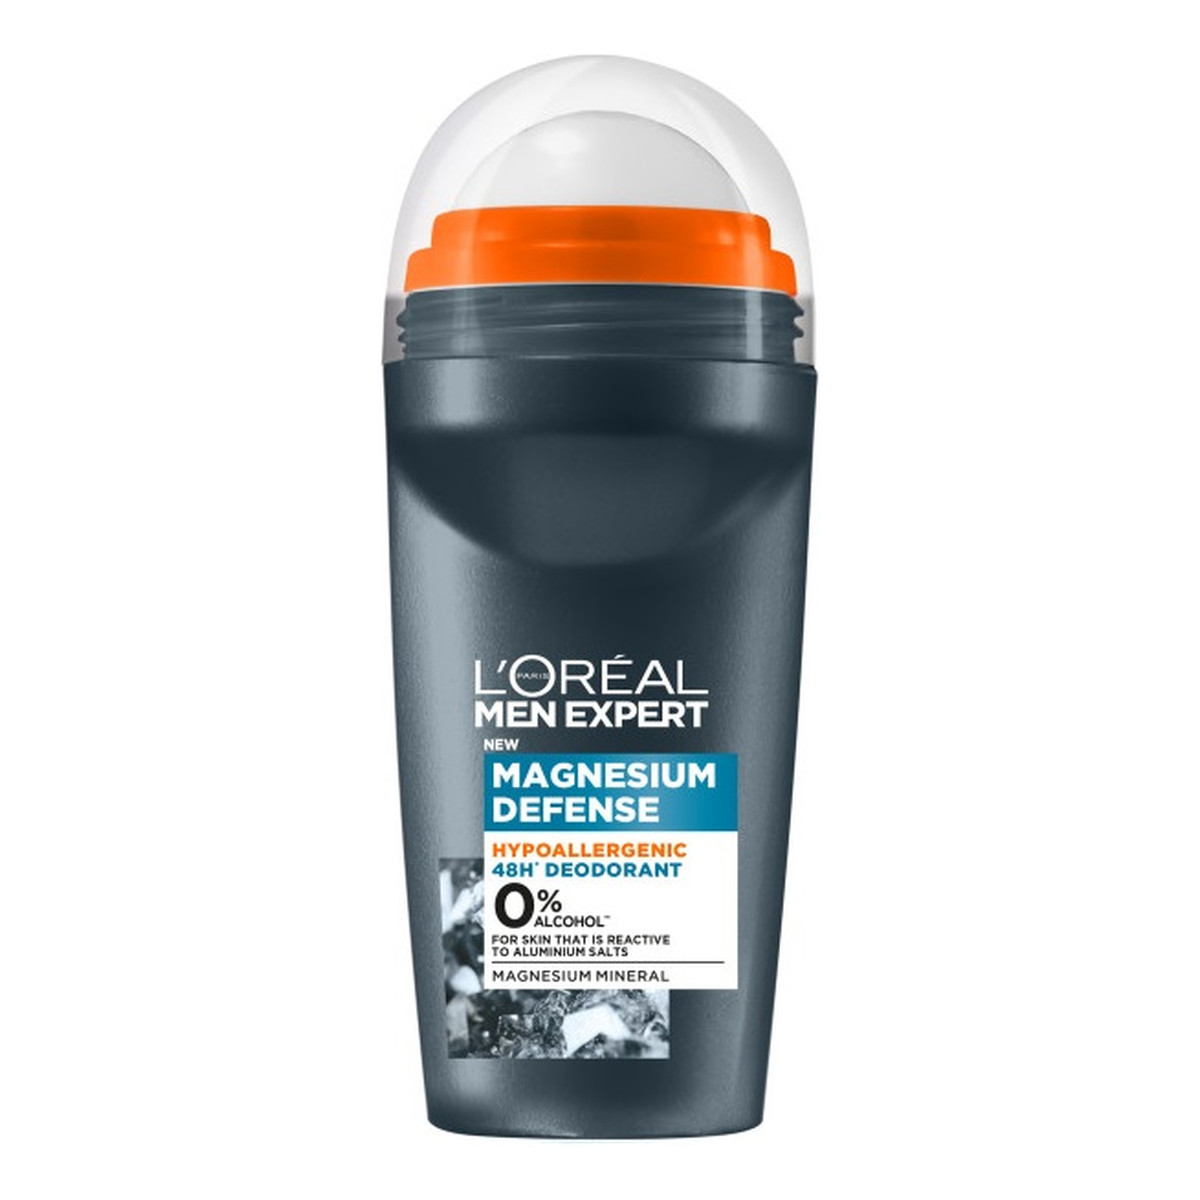 L'Oreal Paris Men Expert Magnesium Defense dezodorant w kulce hipoalergiczny 50ml